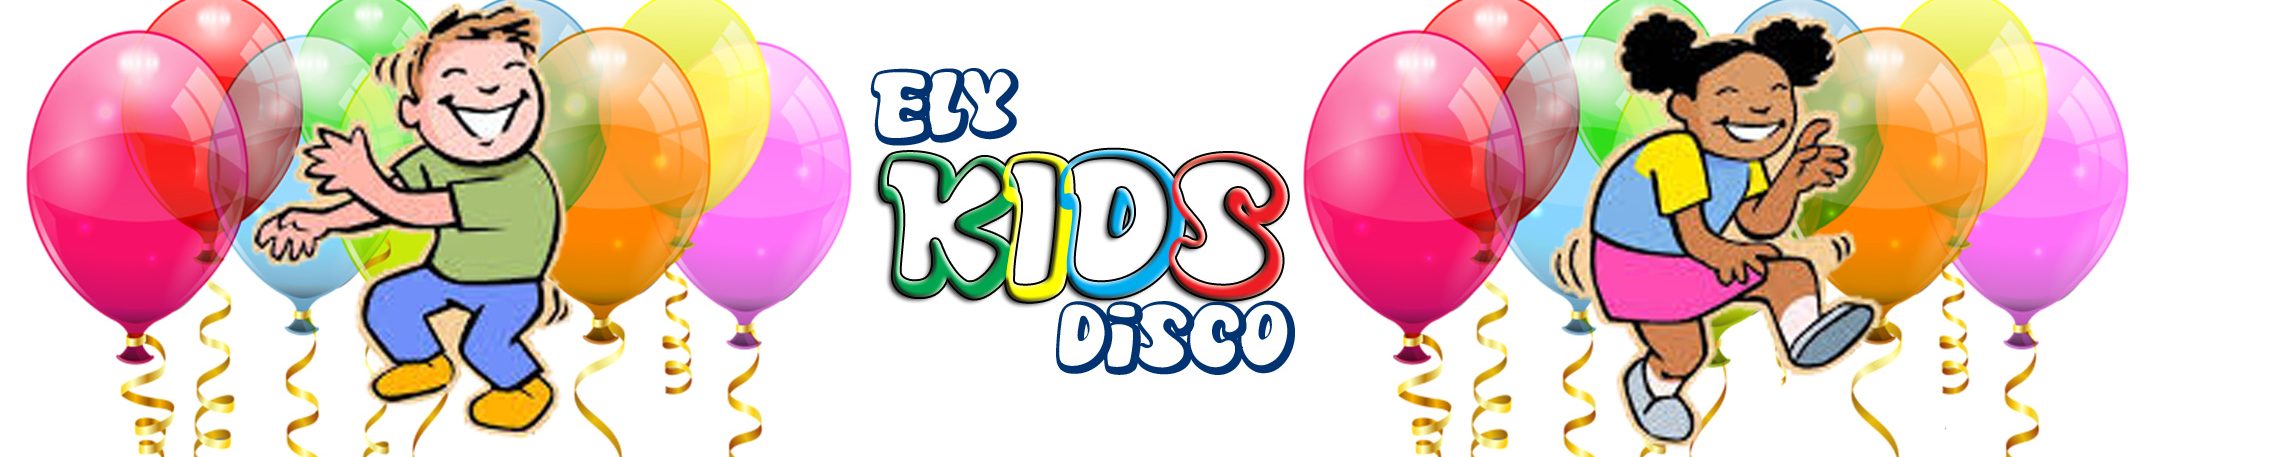 Ely Kids Disco